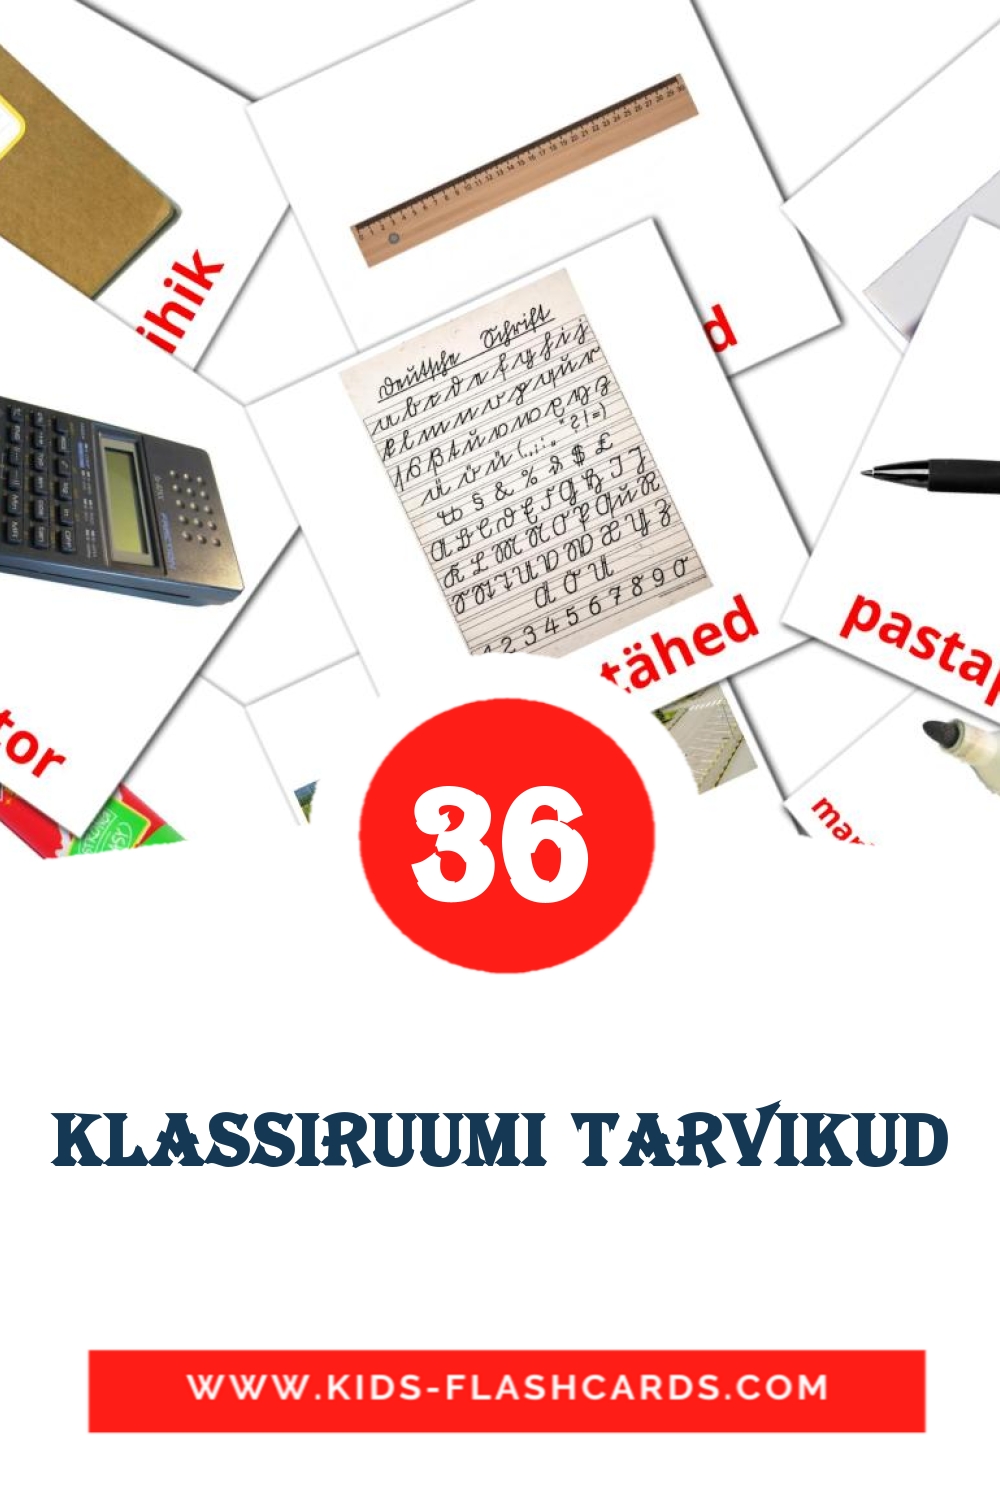 Klassiruumi tarvikud на эстонском для Детского Сада (36 карточек)